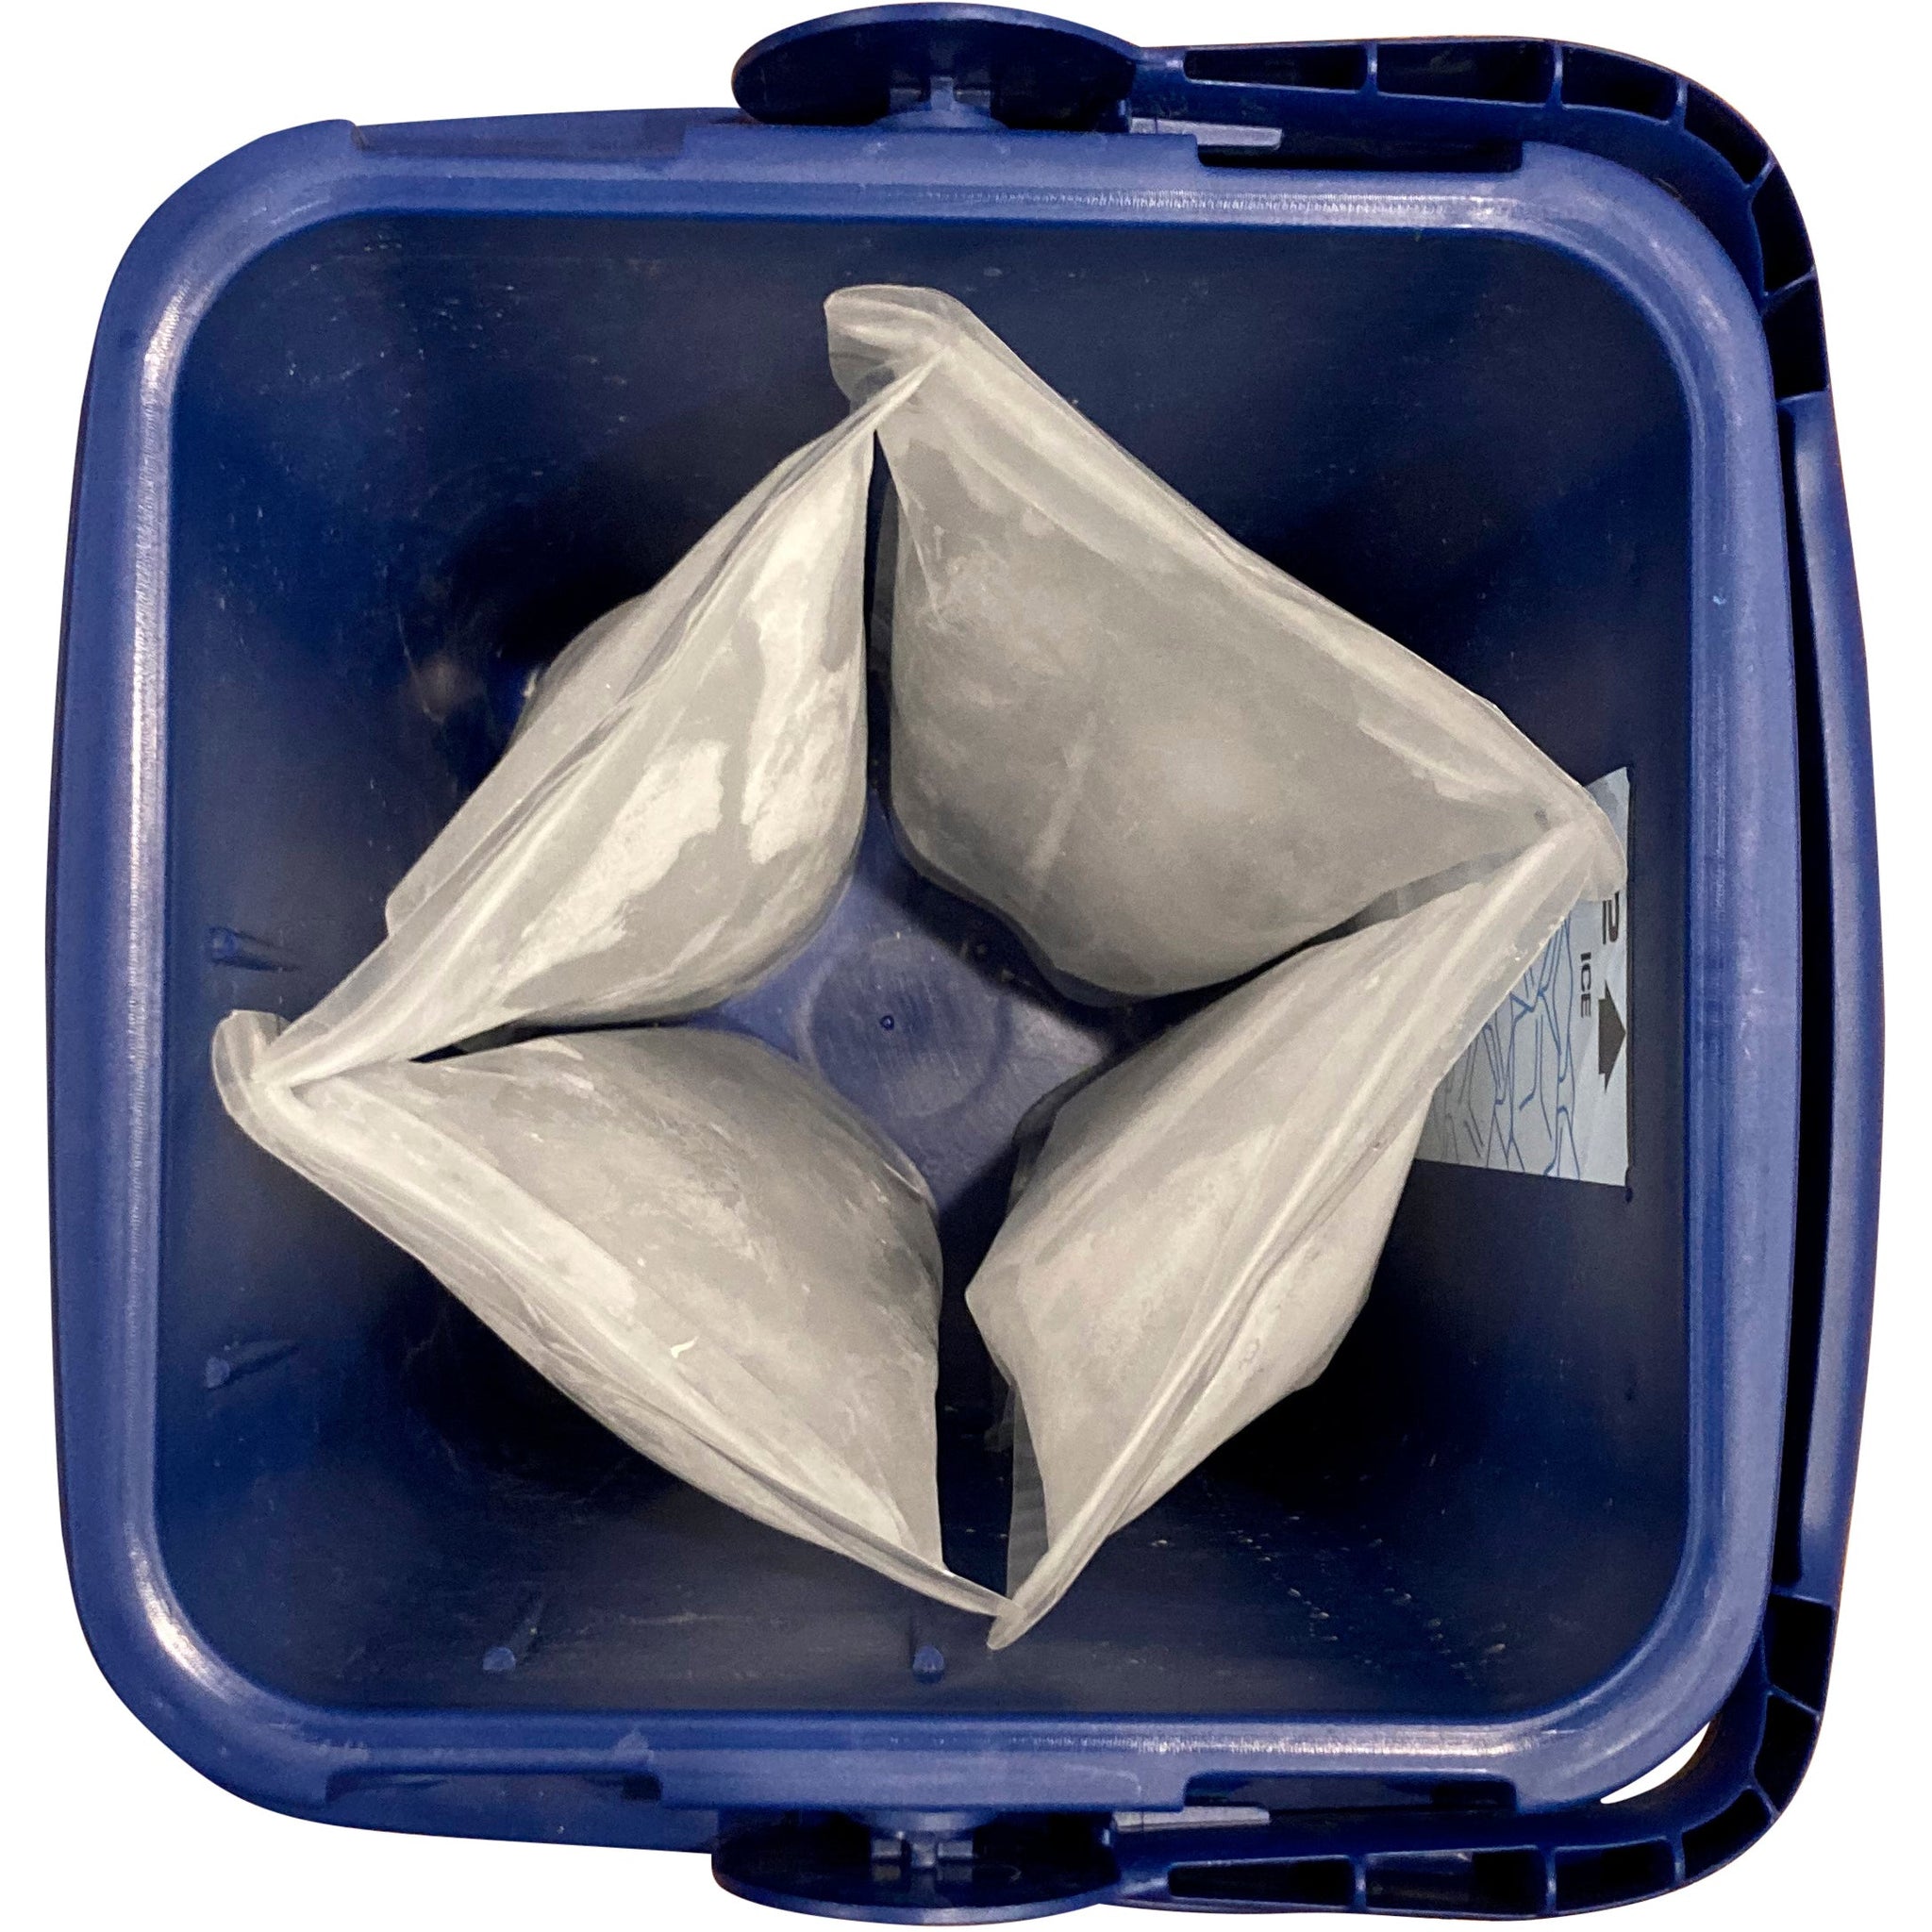 7 Best Ice Bag Freezers for Ice Pack Display & Merchandising